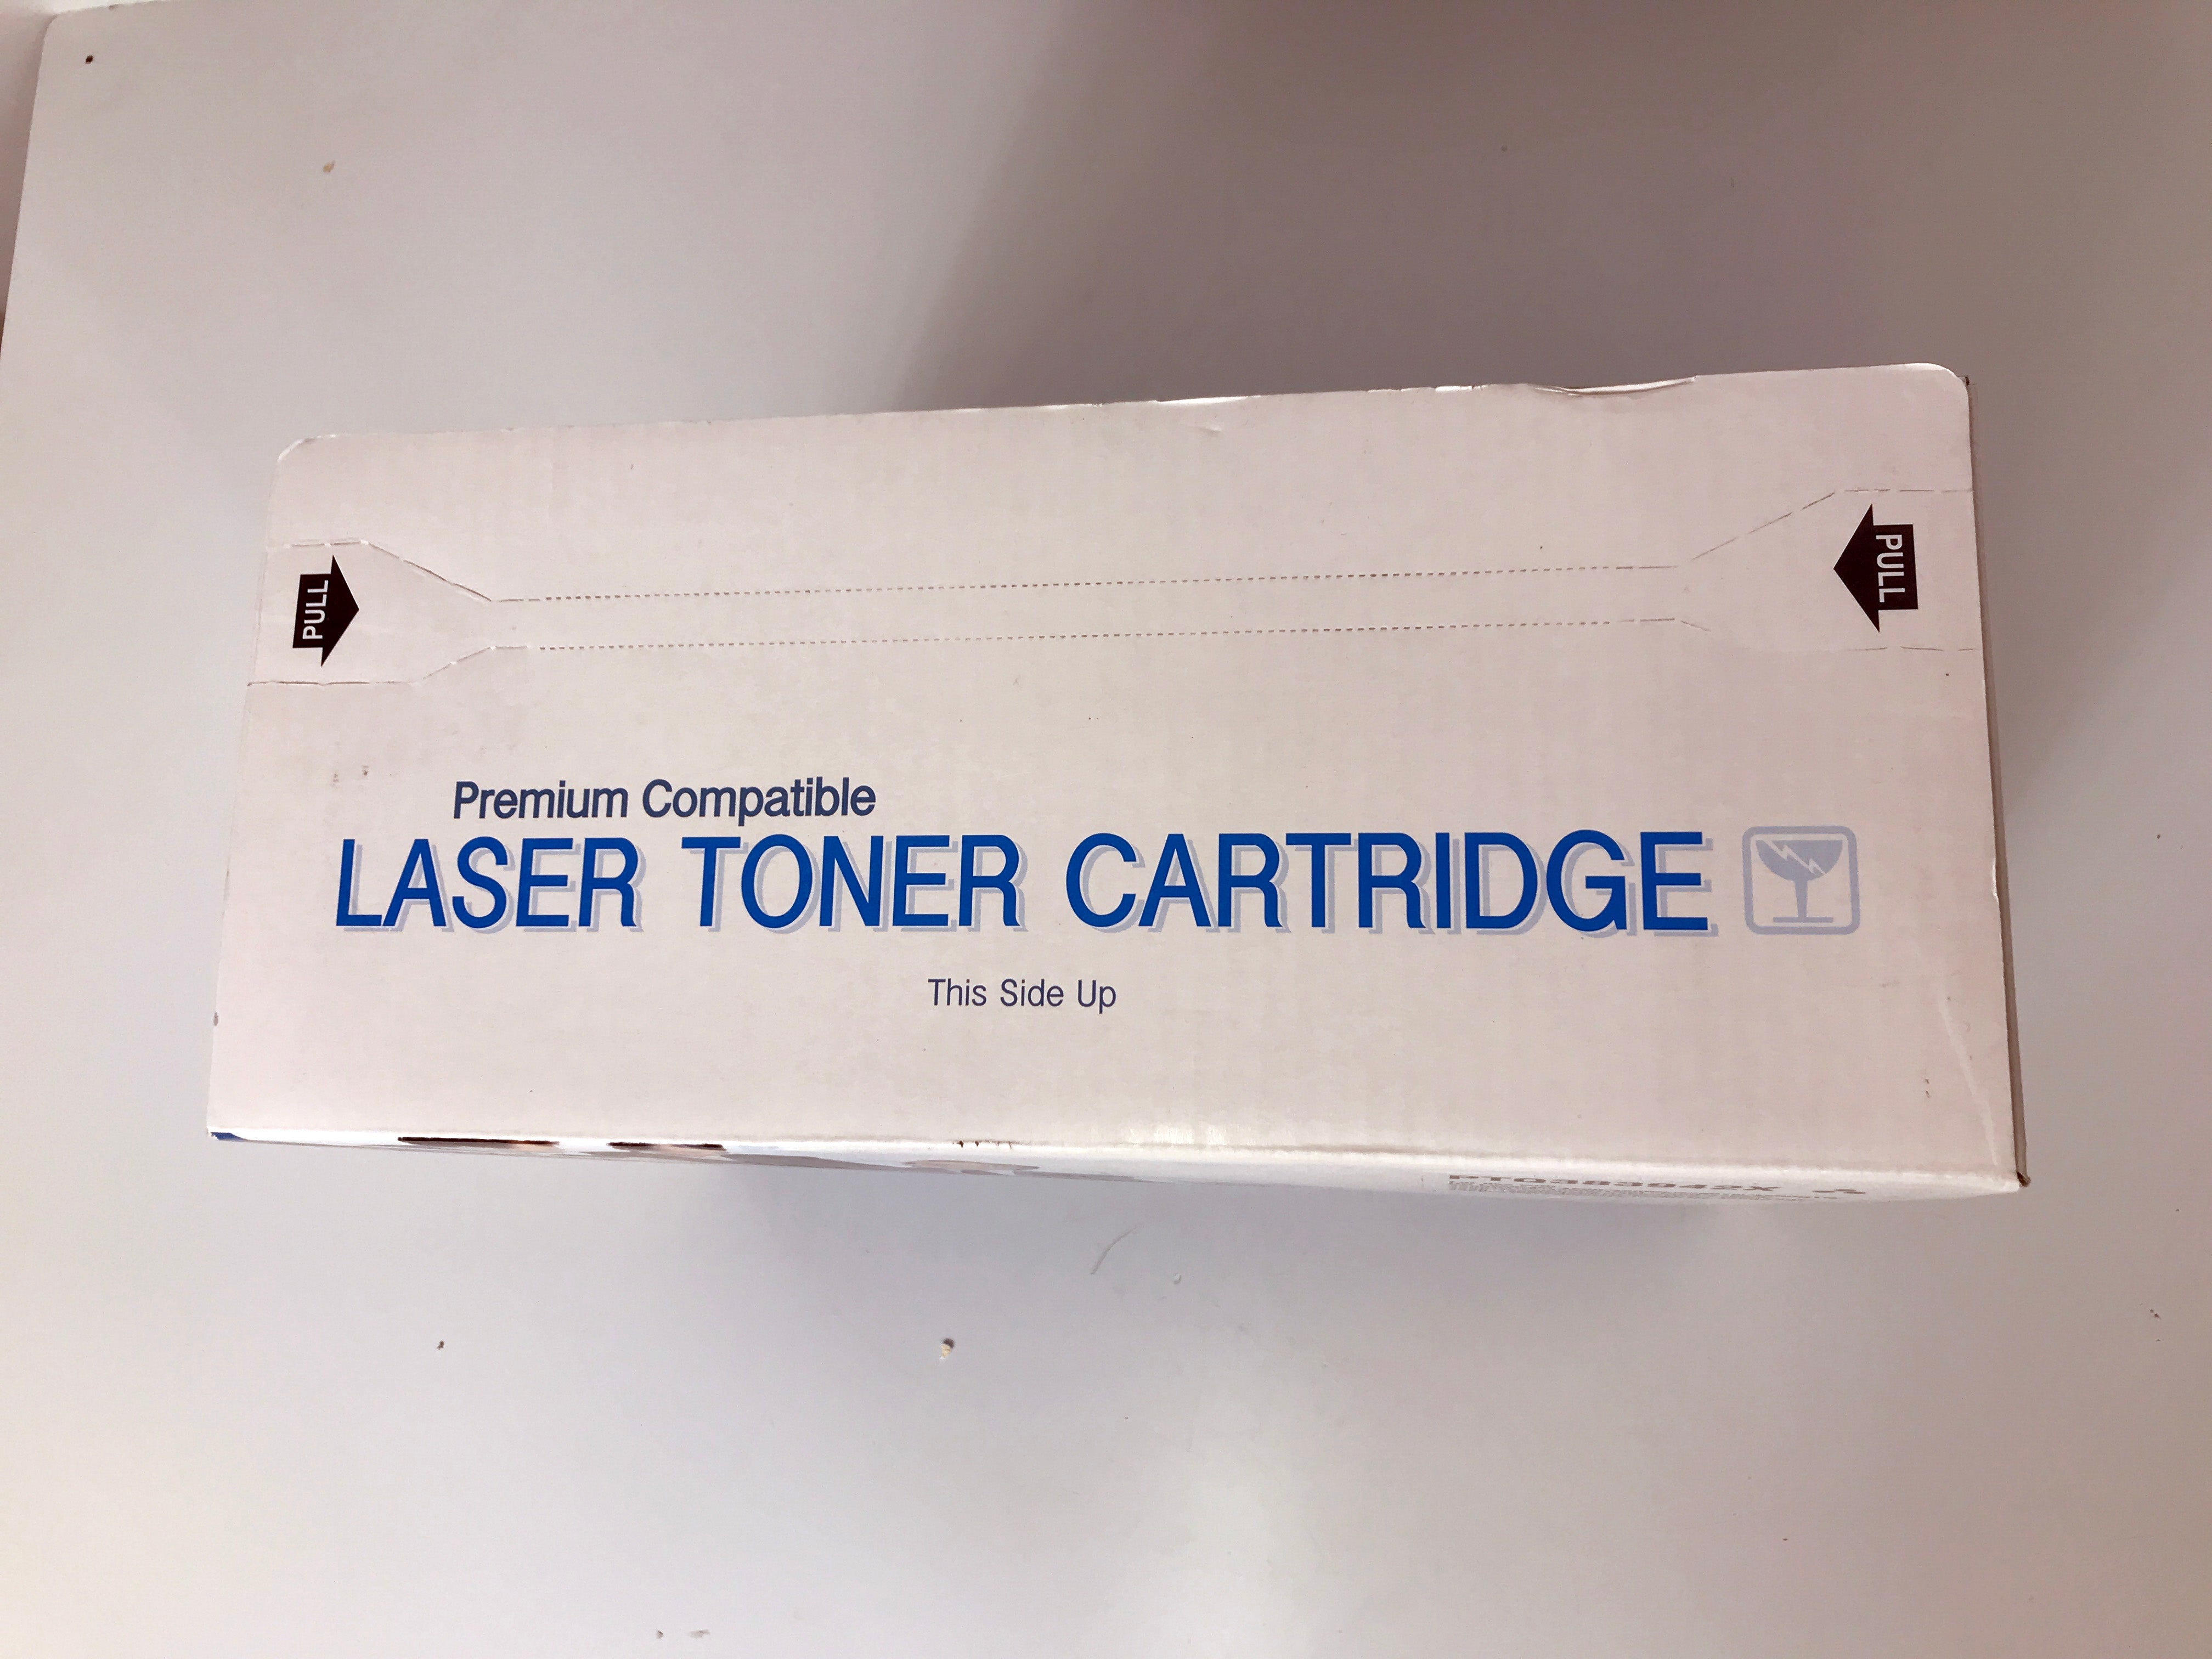 Premium Compatible PTQ383942X Laser Toner Cartridge *New*